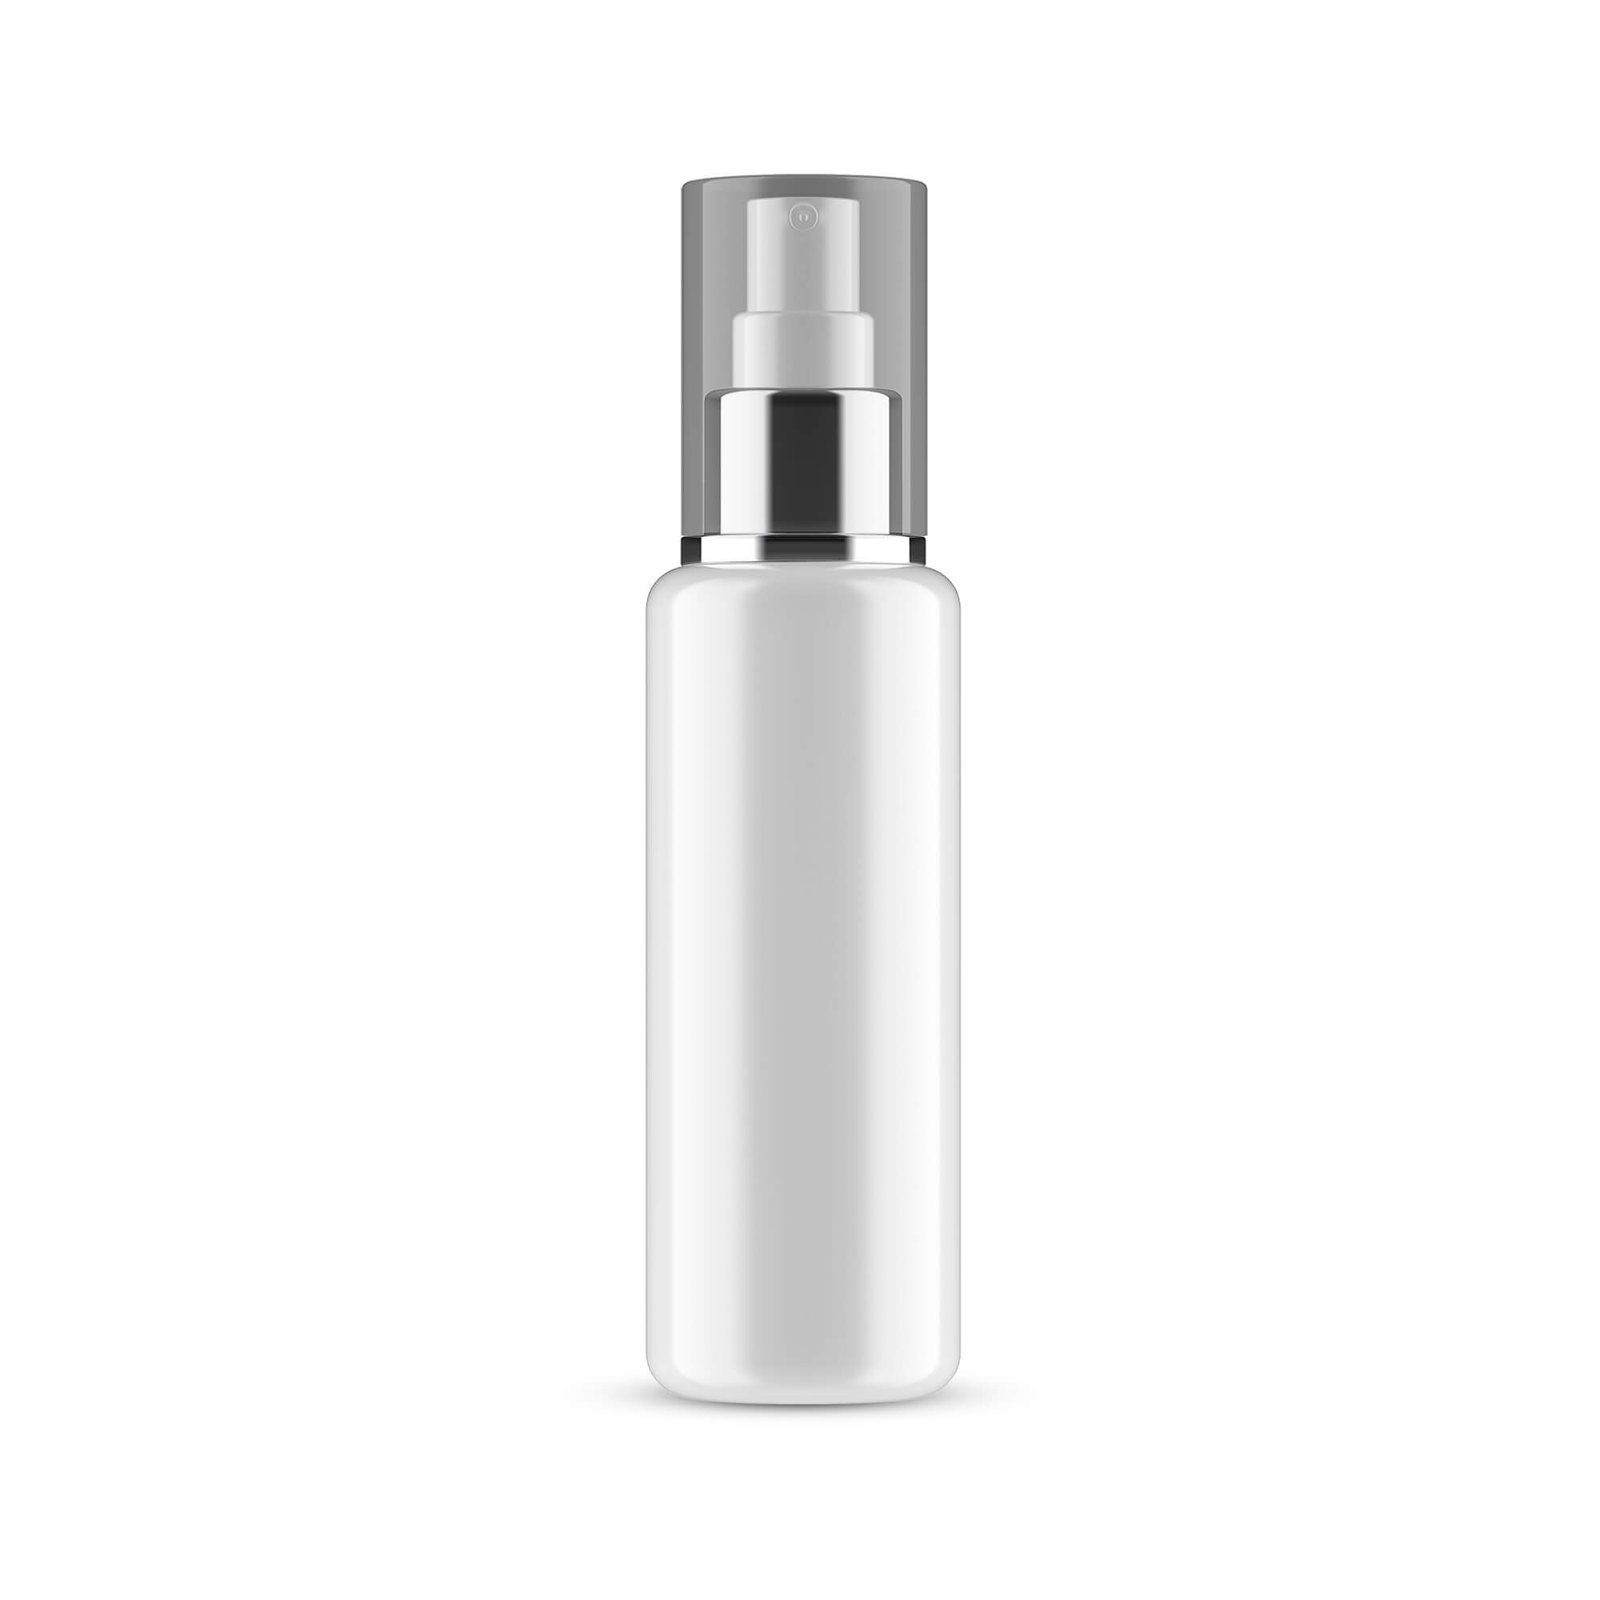 Blank Free Mist Spray Bottle Mockup PSD Template